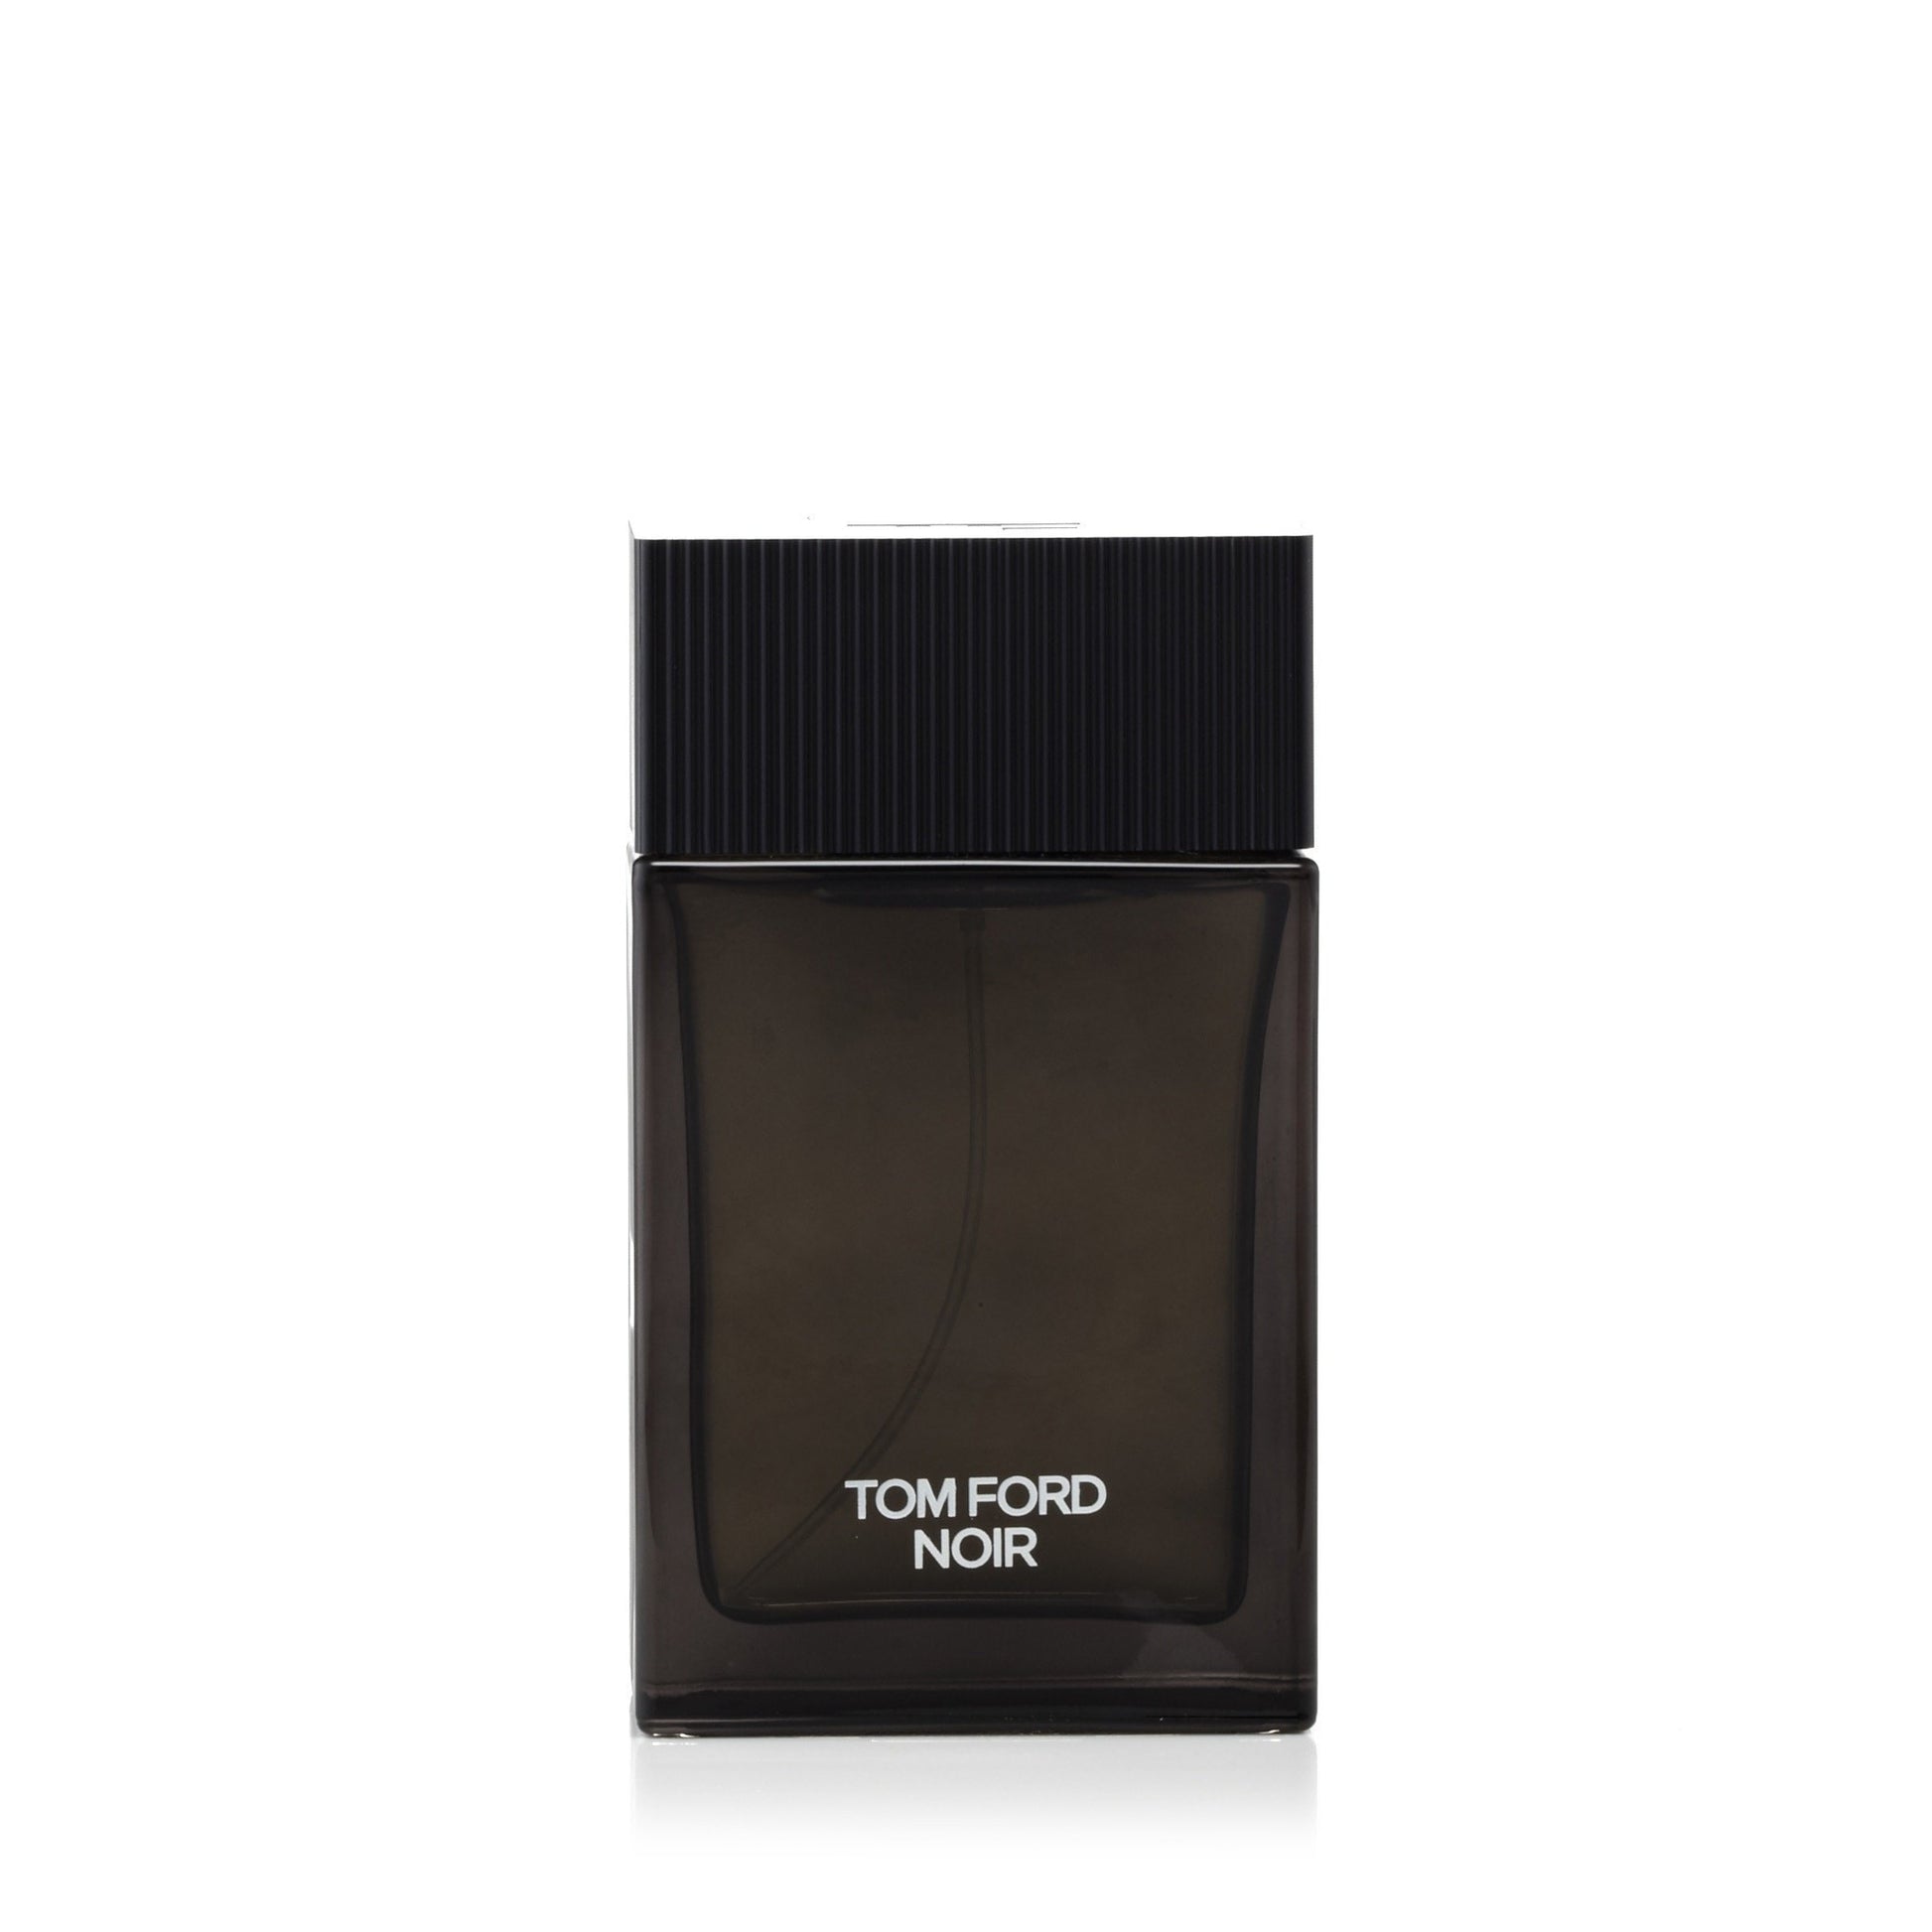 Tom Ford Noir Eau de Parfum Mens Spray 3.4 oz. Click to open in modal